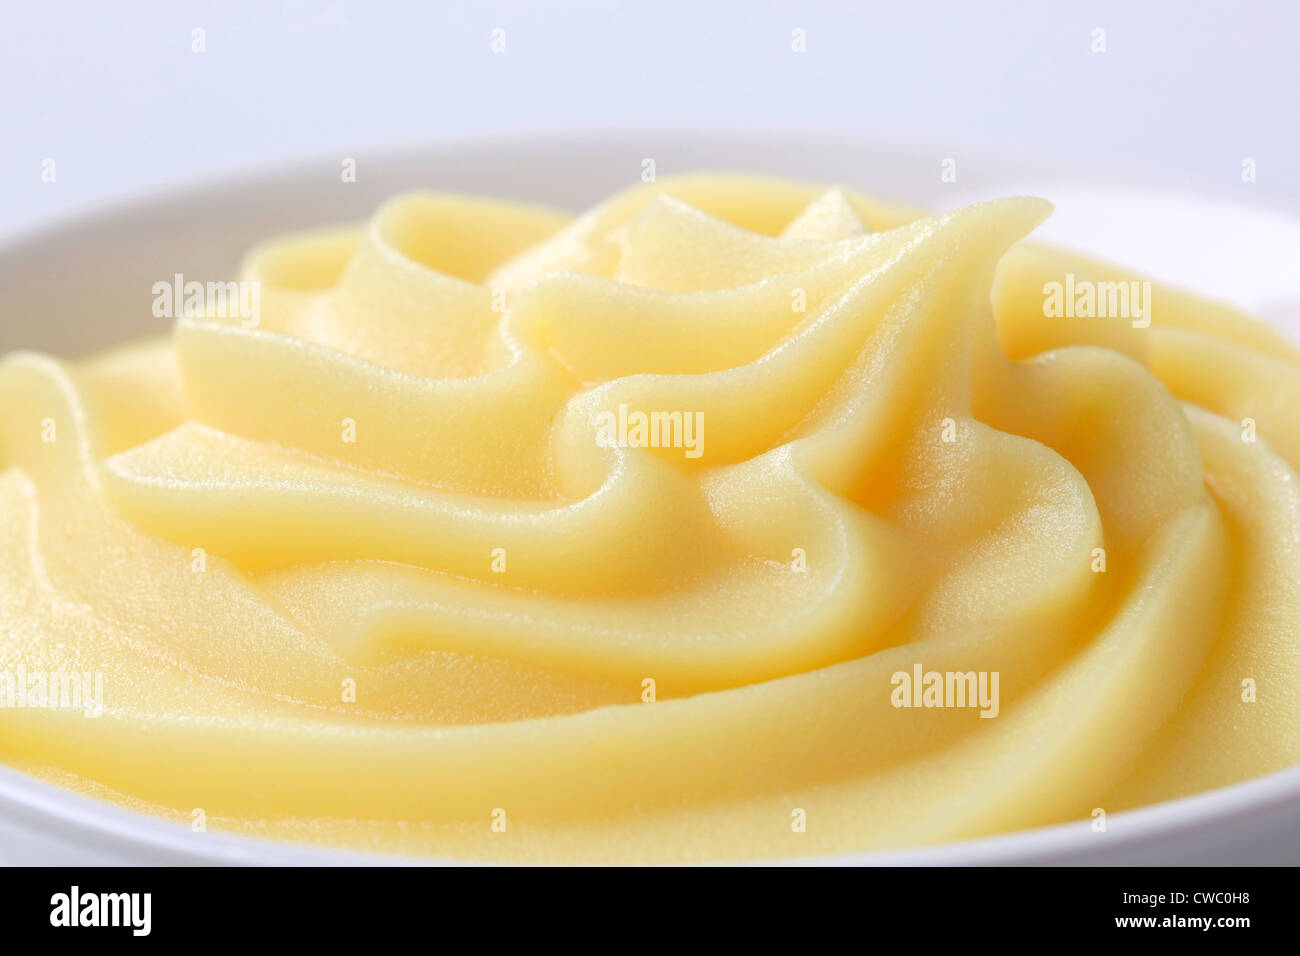 Plate of ready-to-eat mashed potato Stock Photo